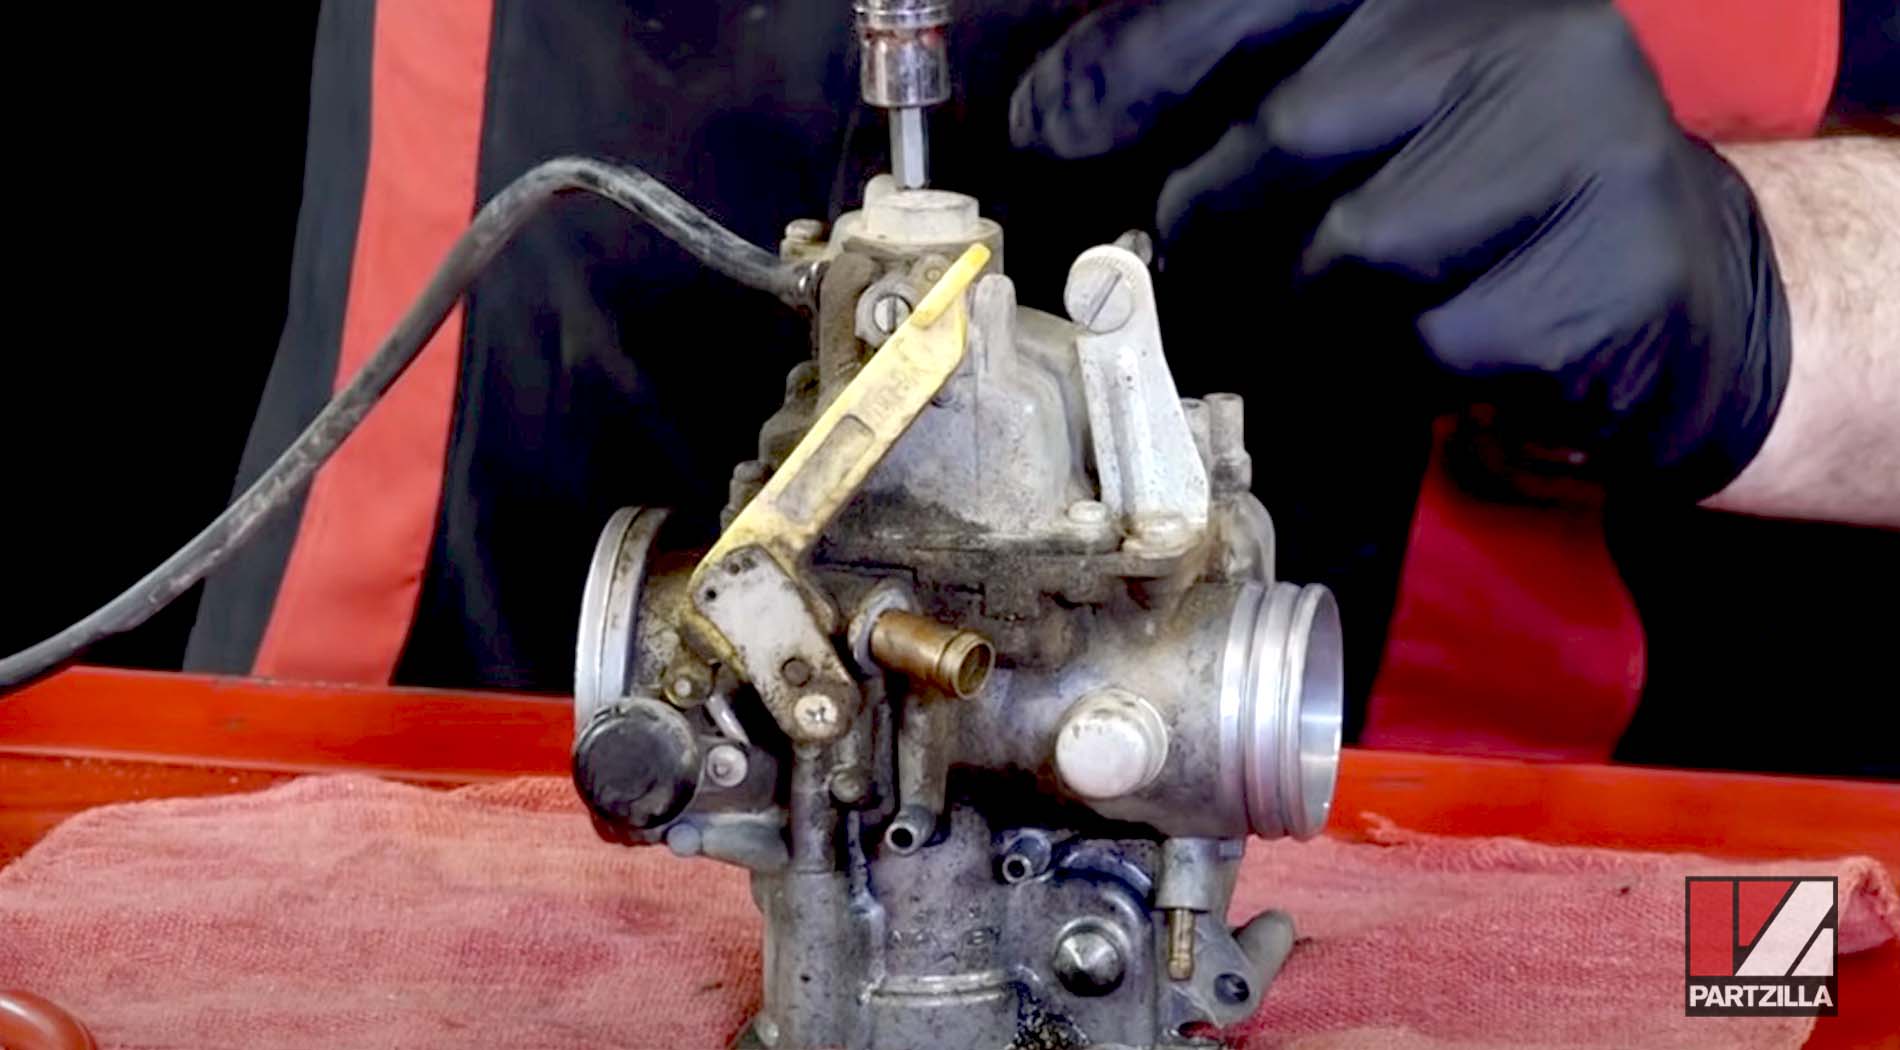 Honda TRX400 carburetor disassembly